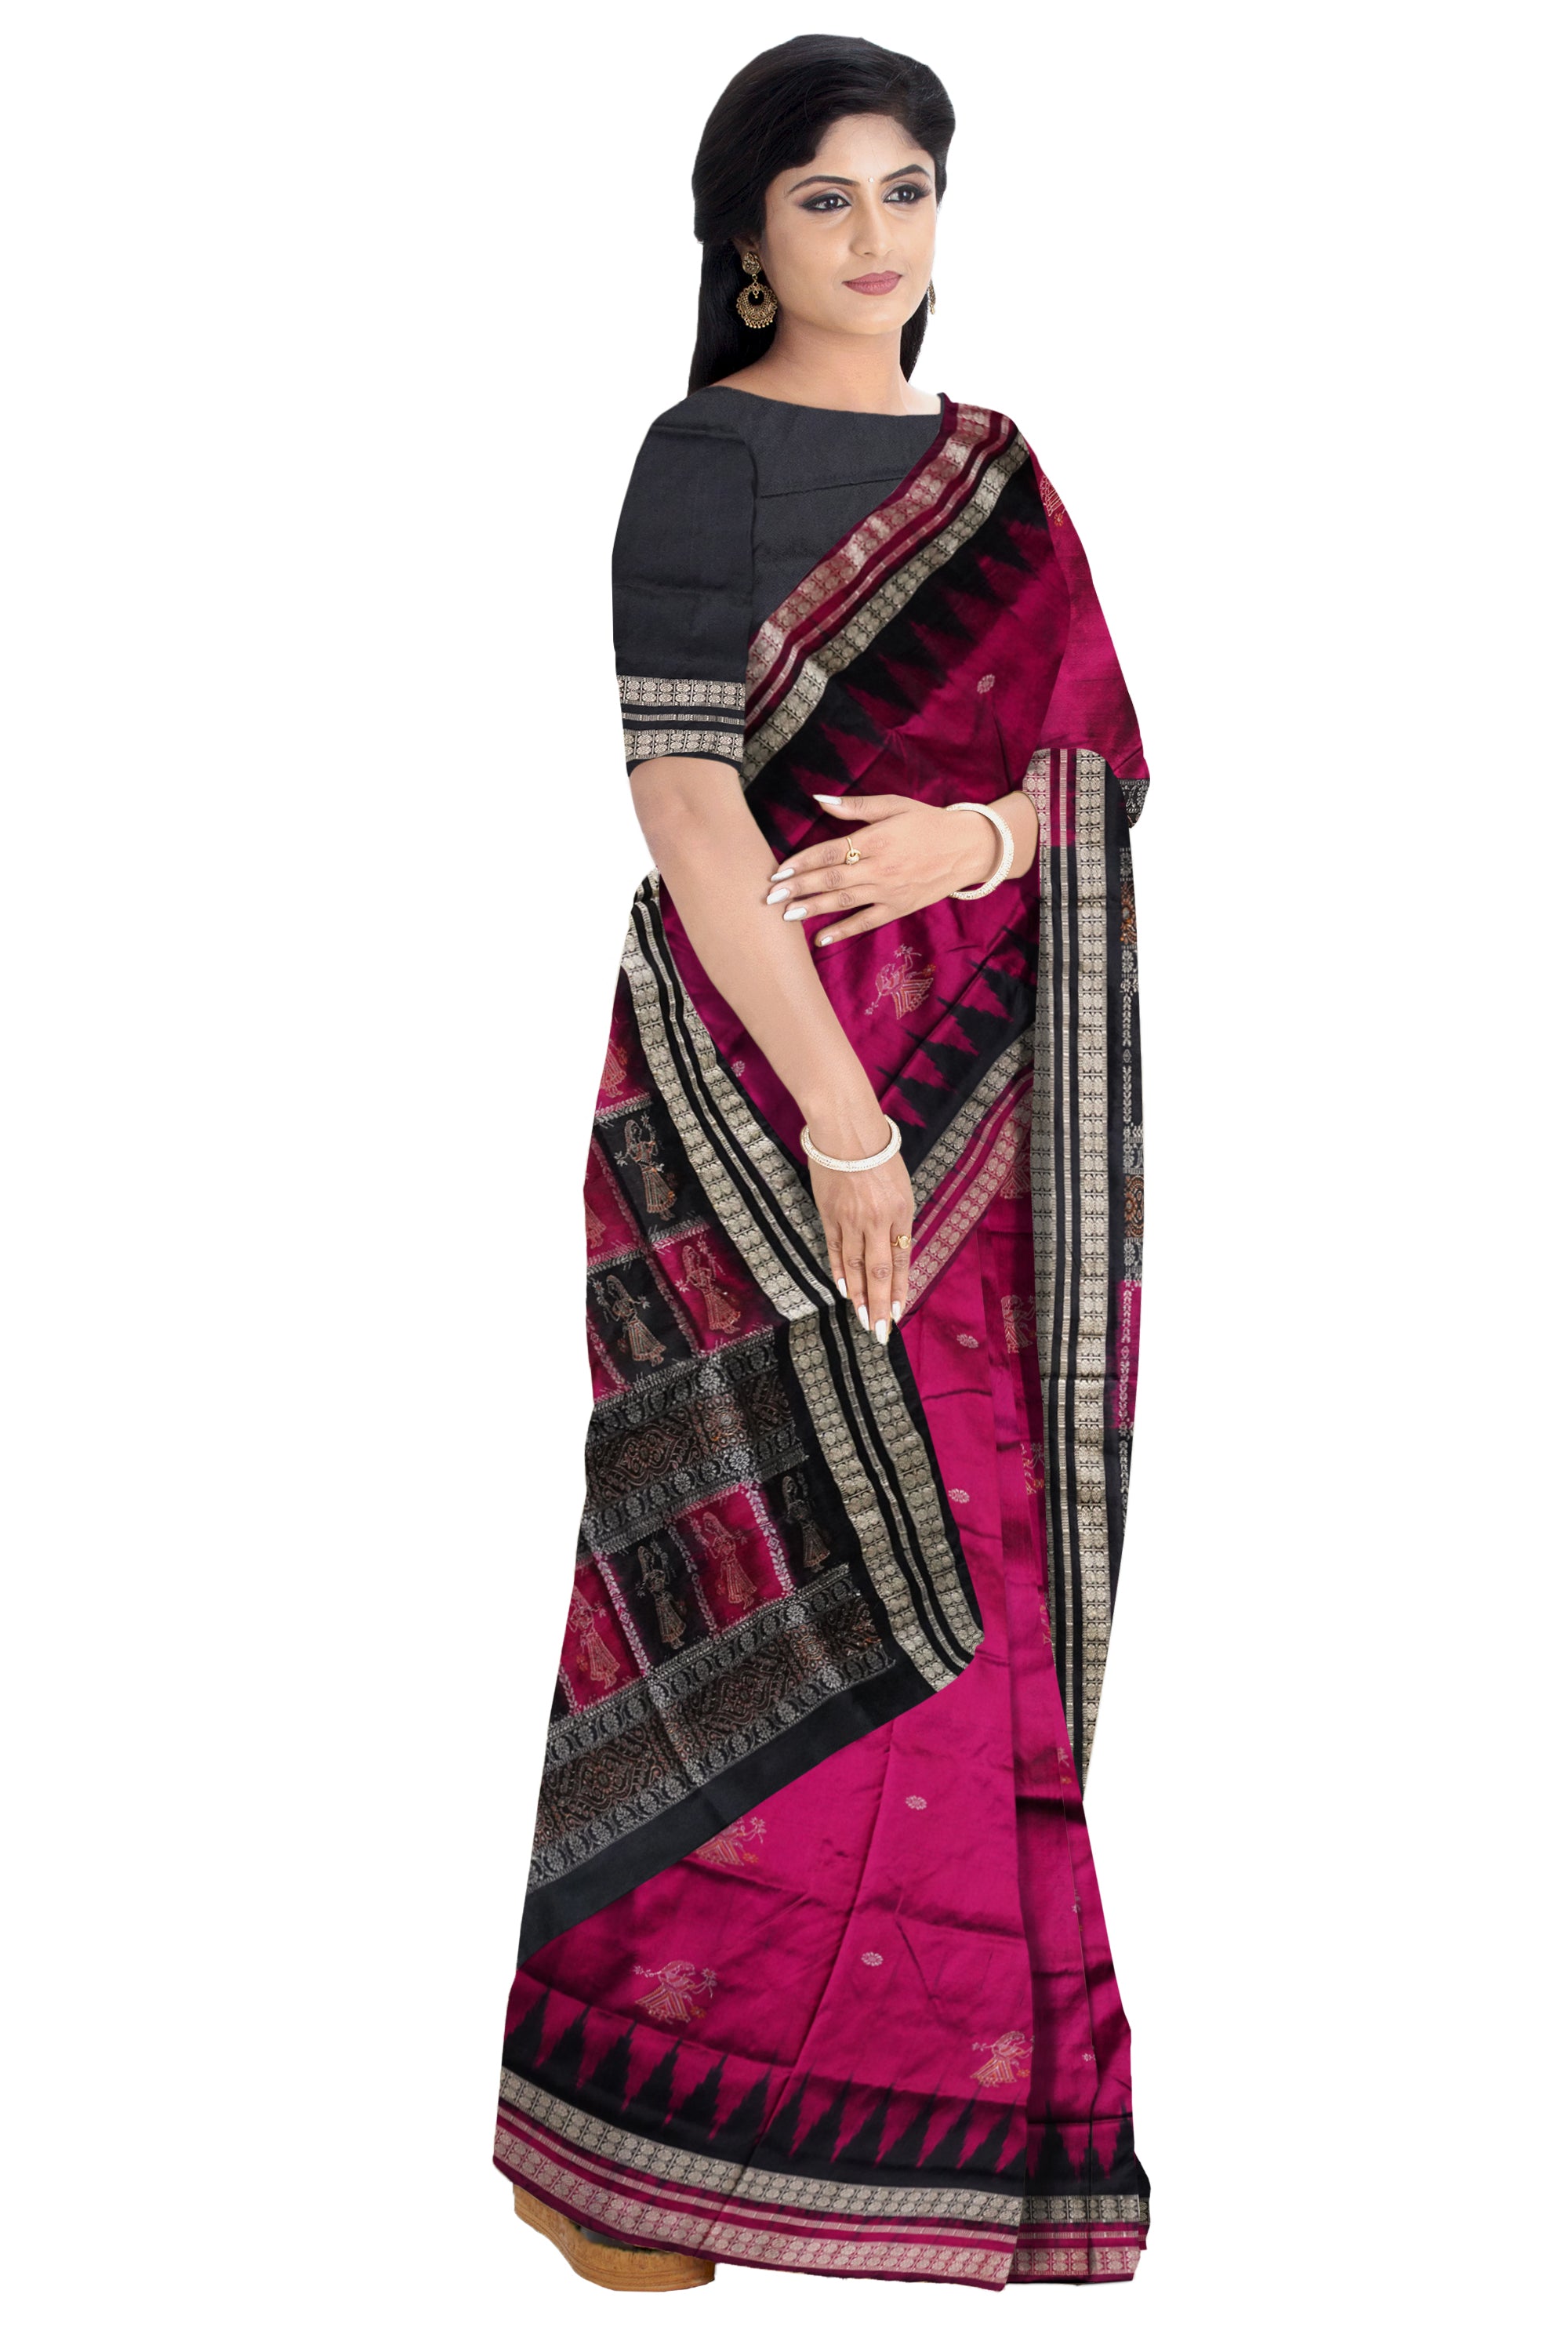 Deep pink & Black color full body with pallu doll pattern pata saree. - Koshali Arts & Crafts Enterprise